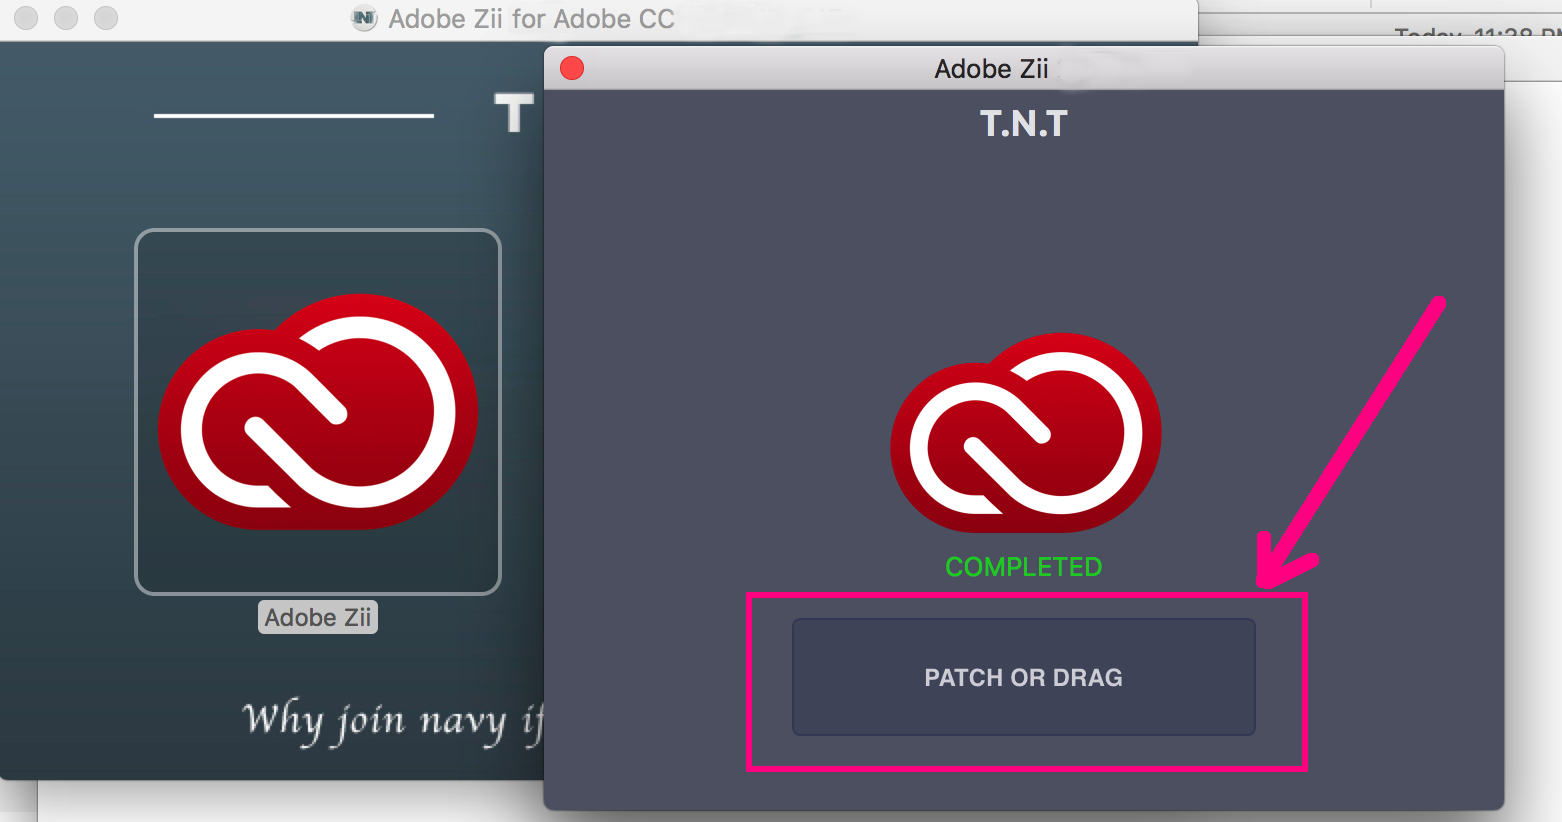 Adobe zii 3 4 cc 2018 universal patcher for mac